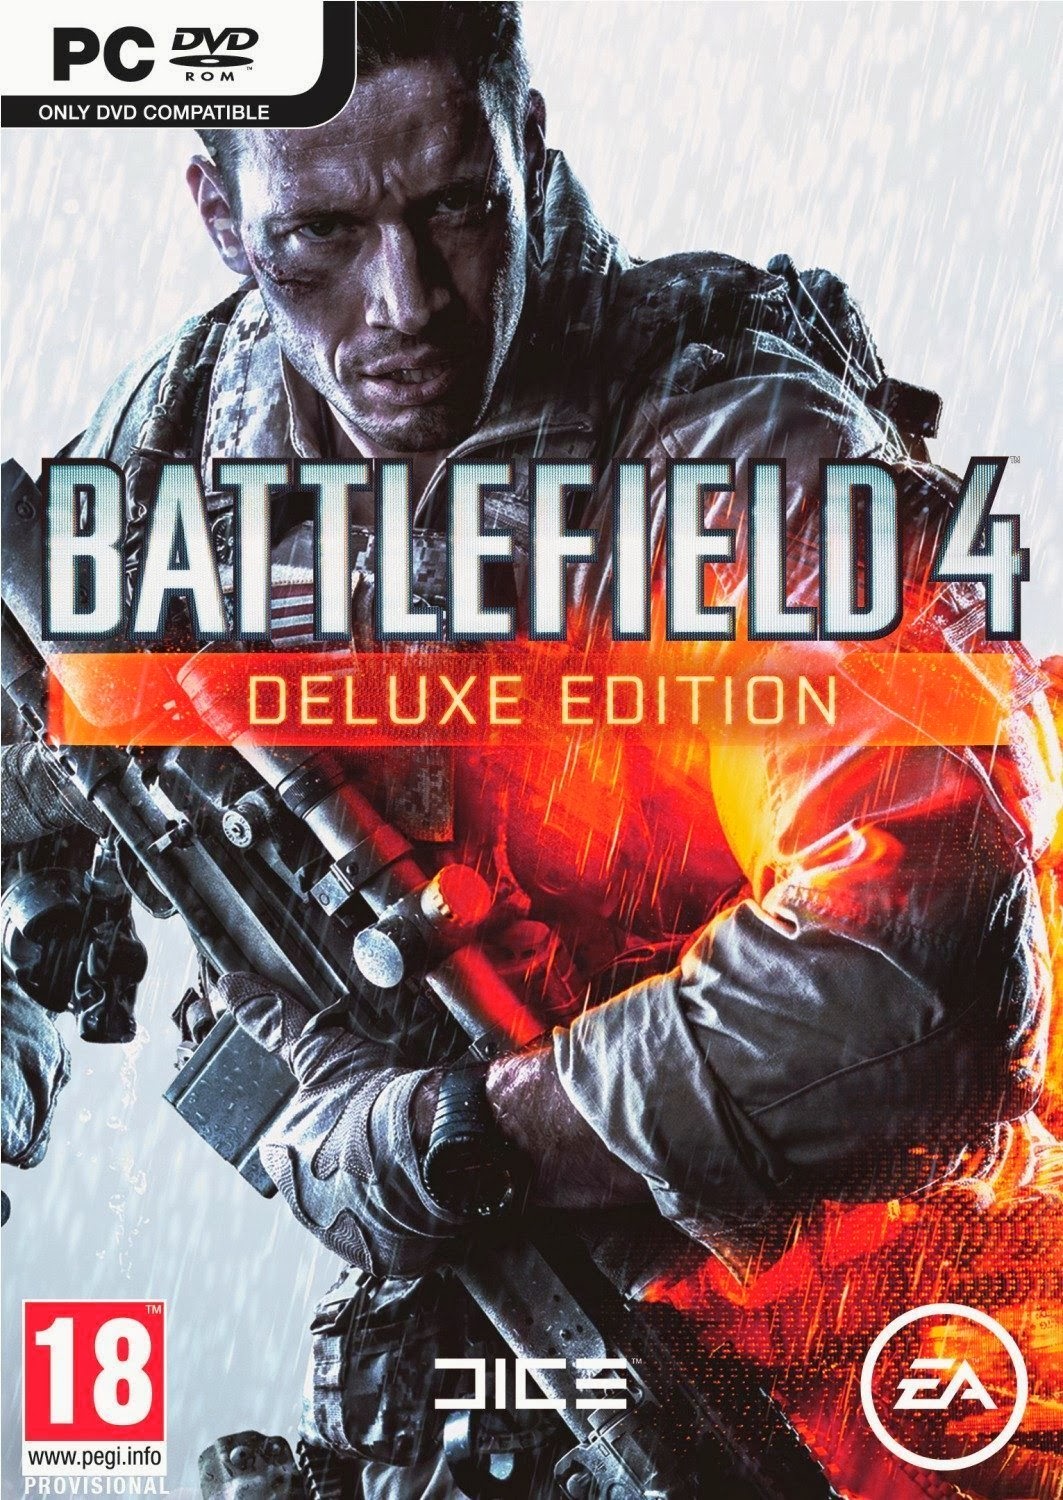 download battlefield 4 premium for free